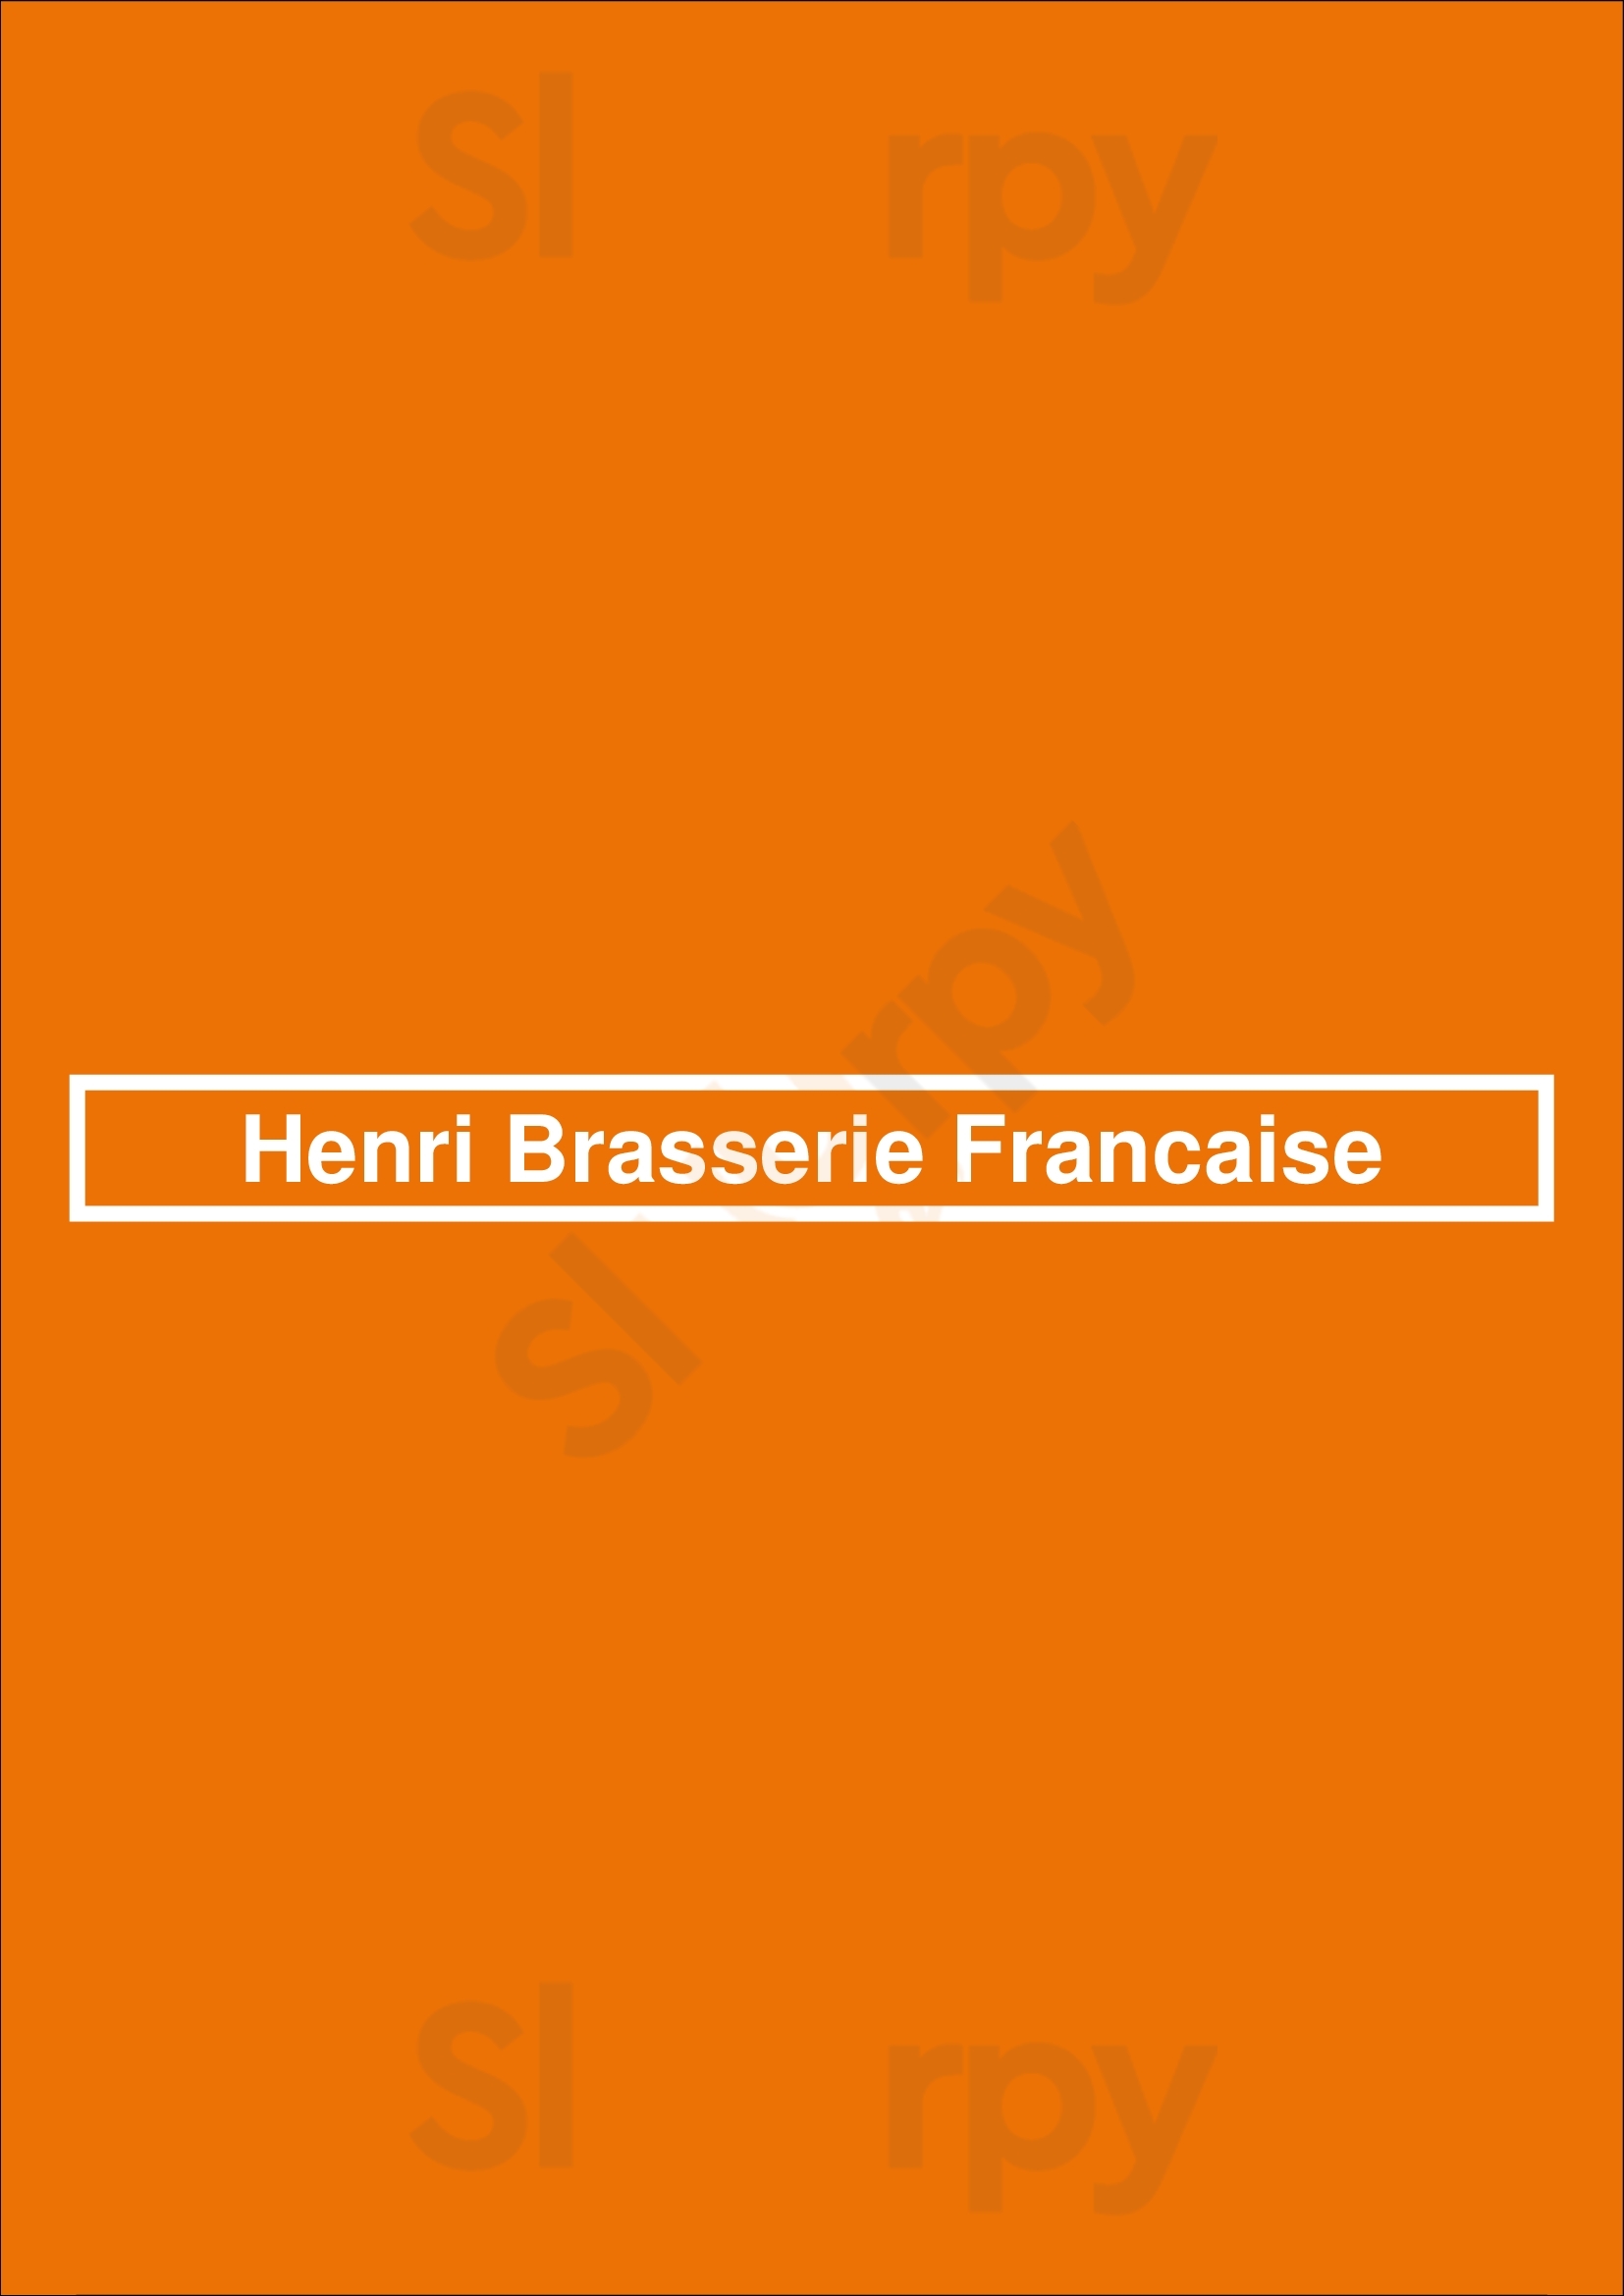 Henri Brasserie Francaise Montreal Menu - 1